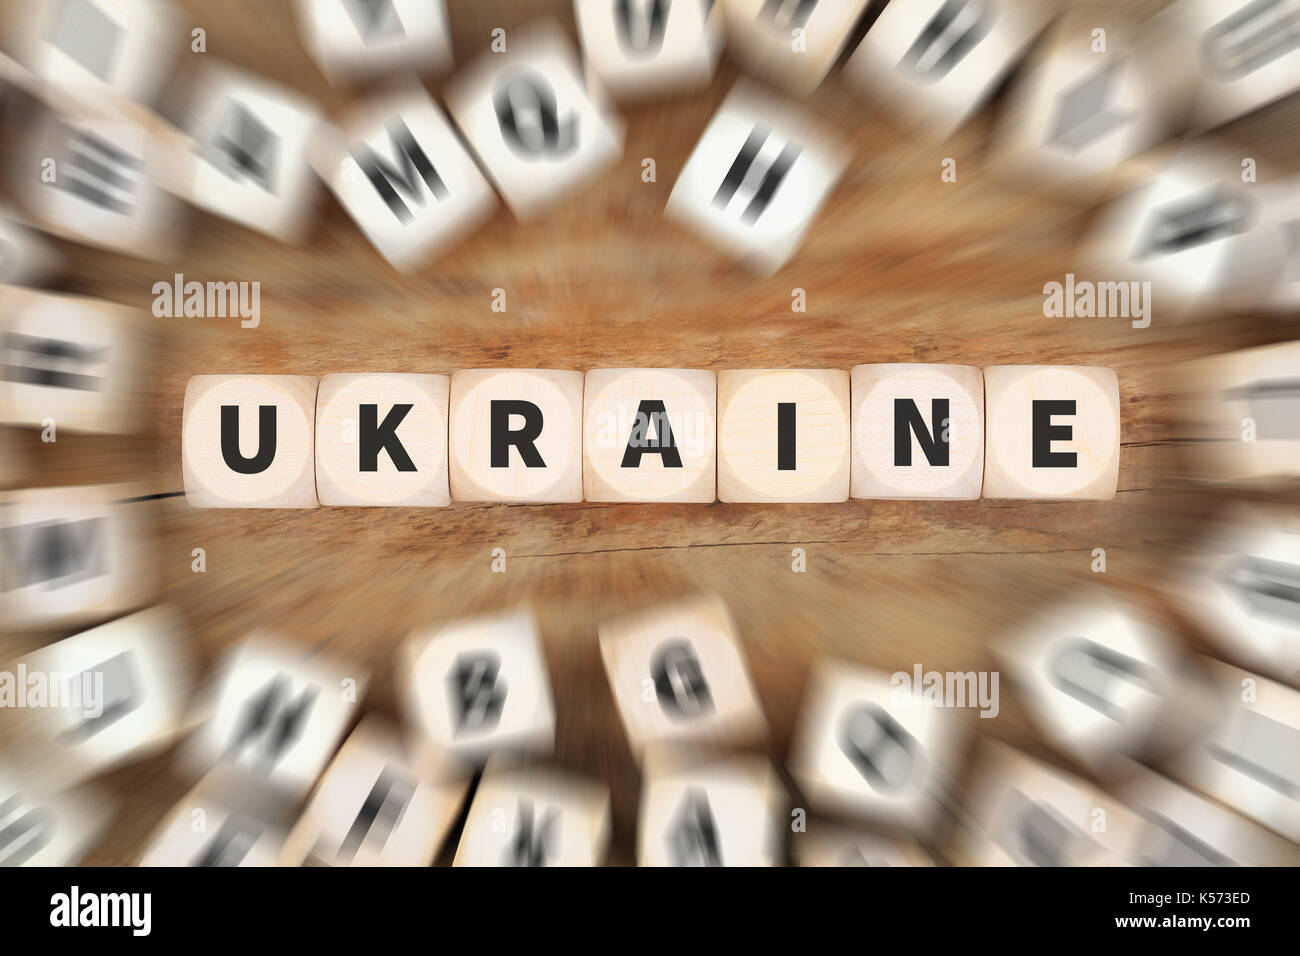 Ukraine conflict crisis dice business concept idea Stock Photo